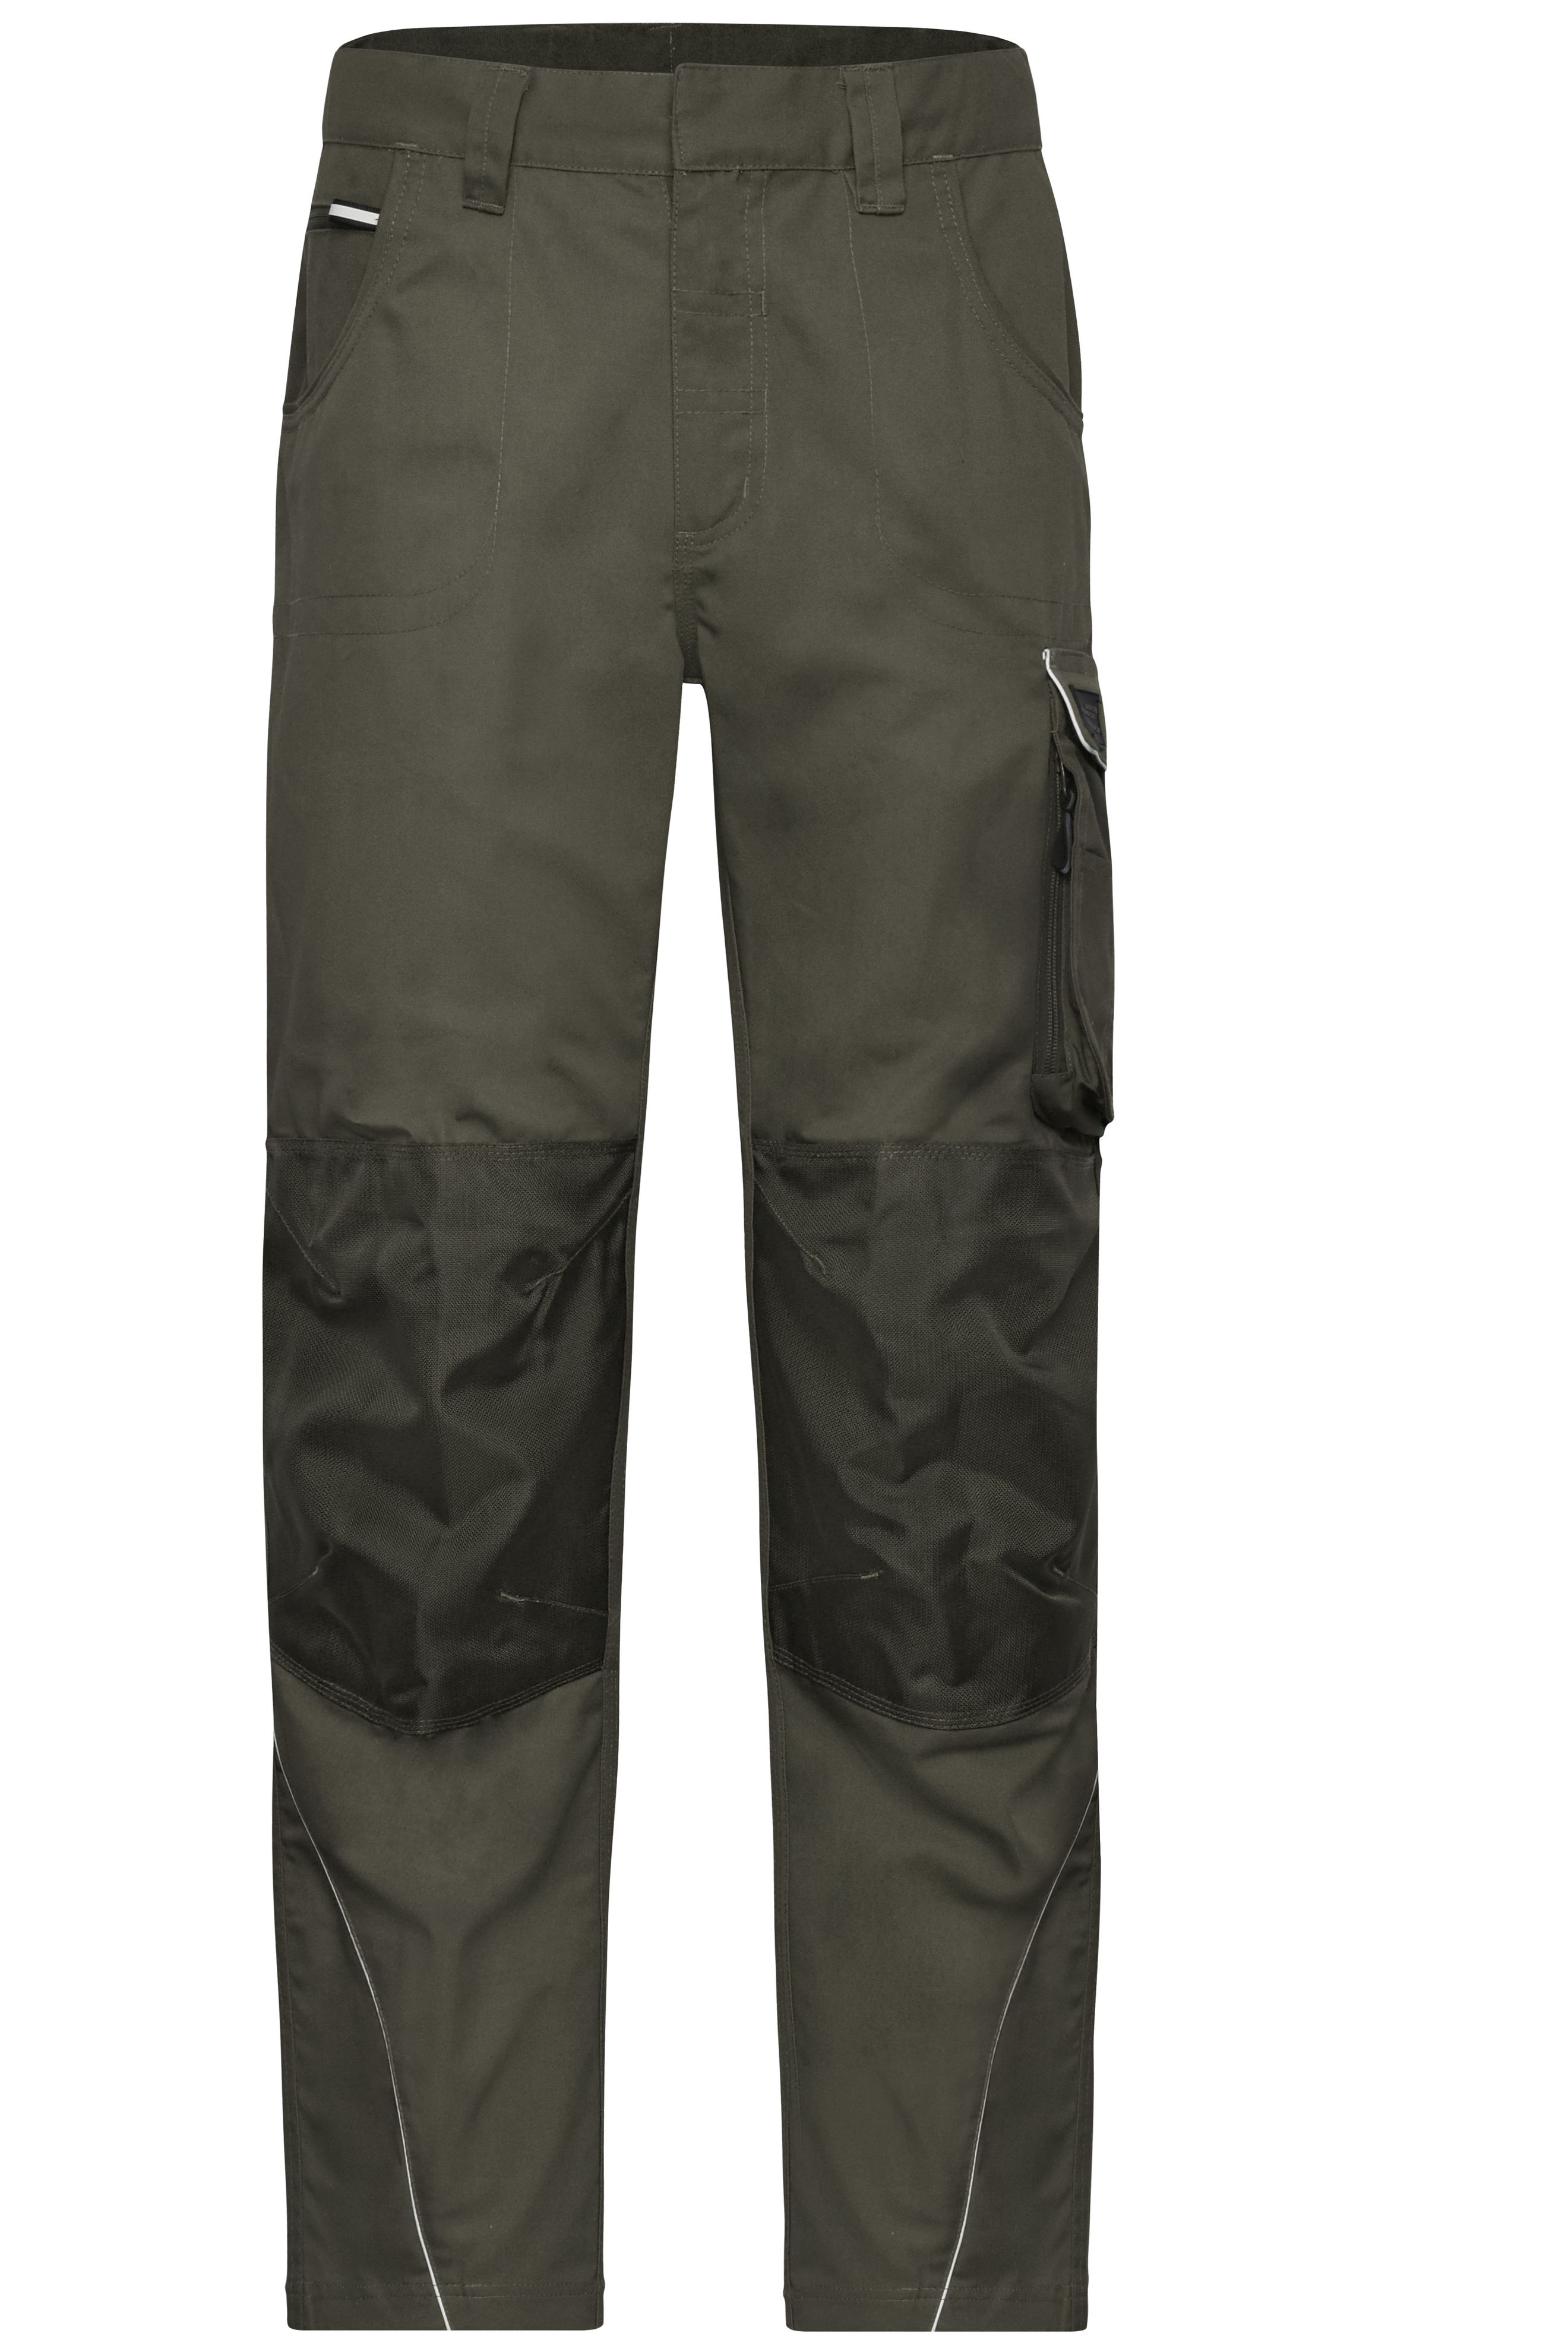 Unisex Workwear Pants - SOLID - Olive-Daiber